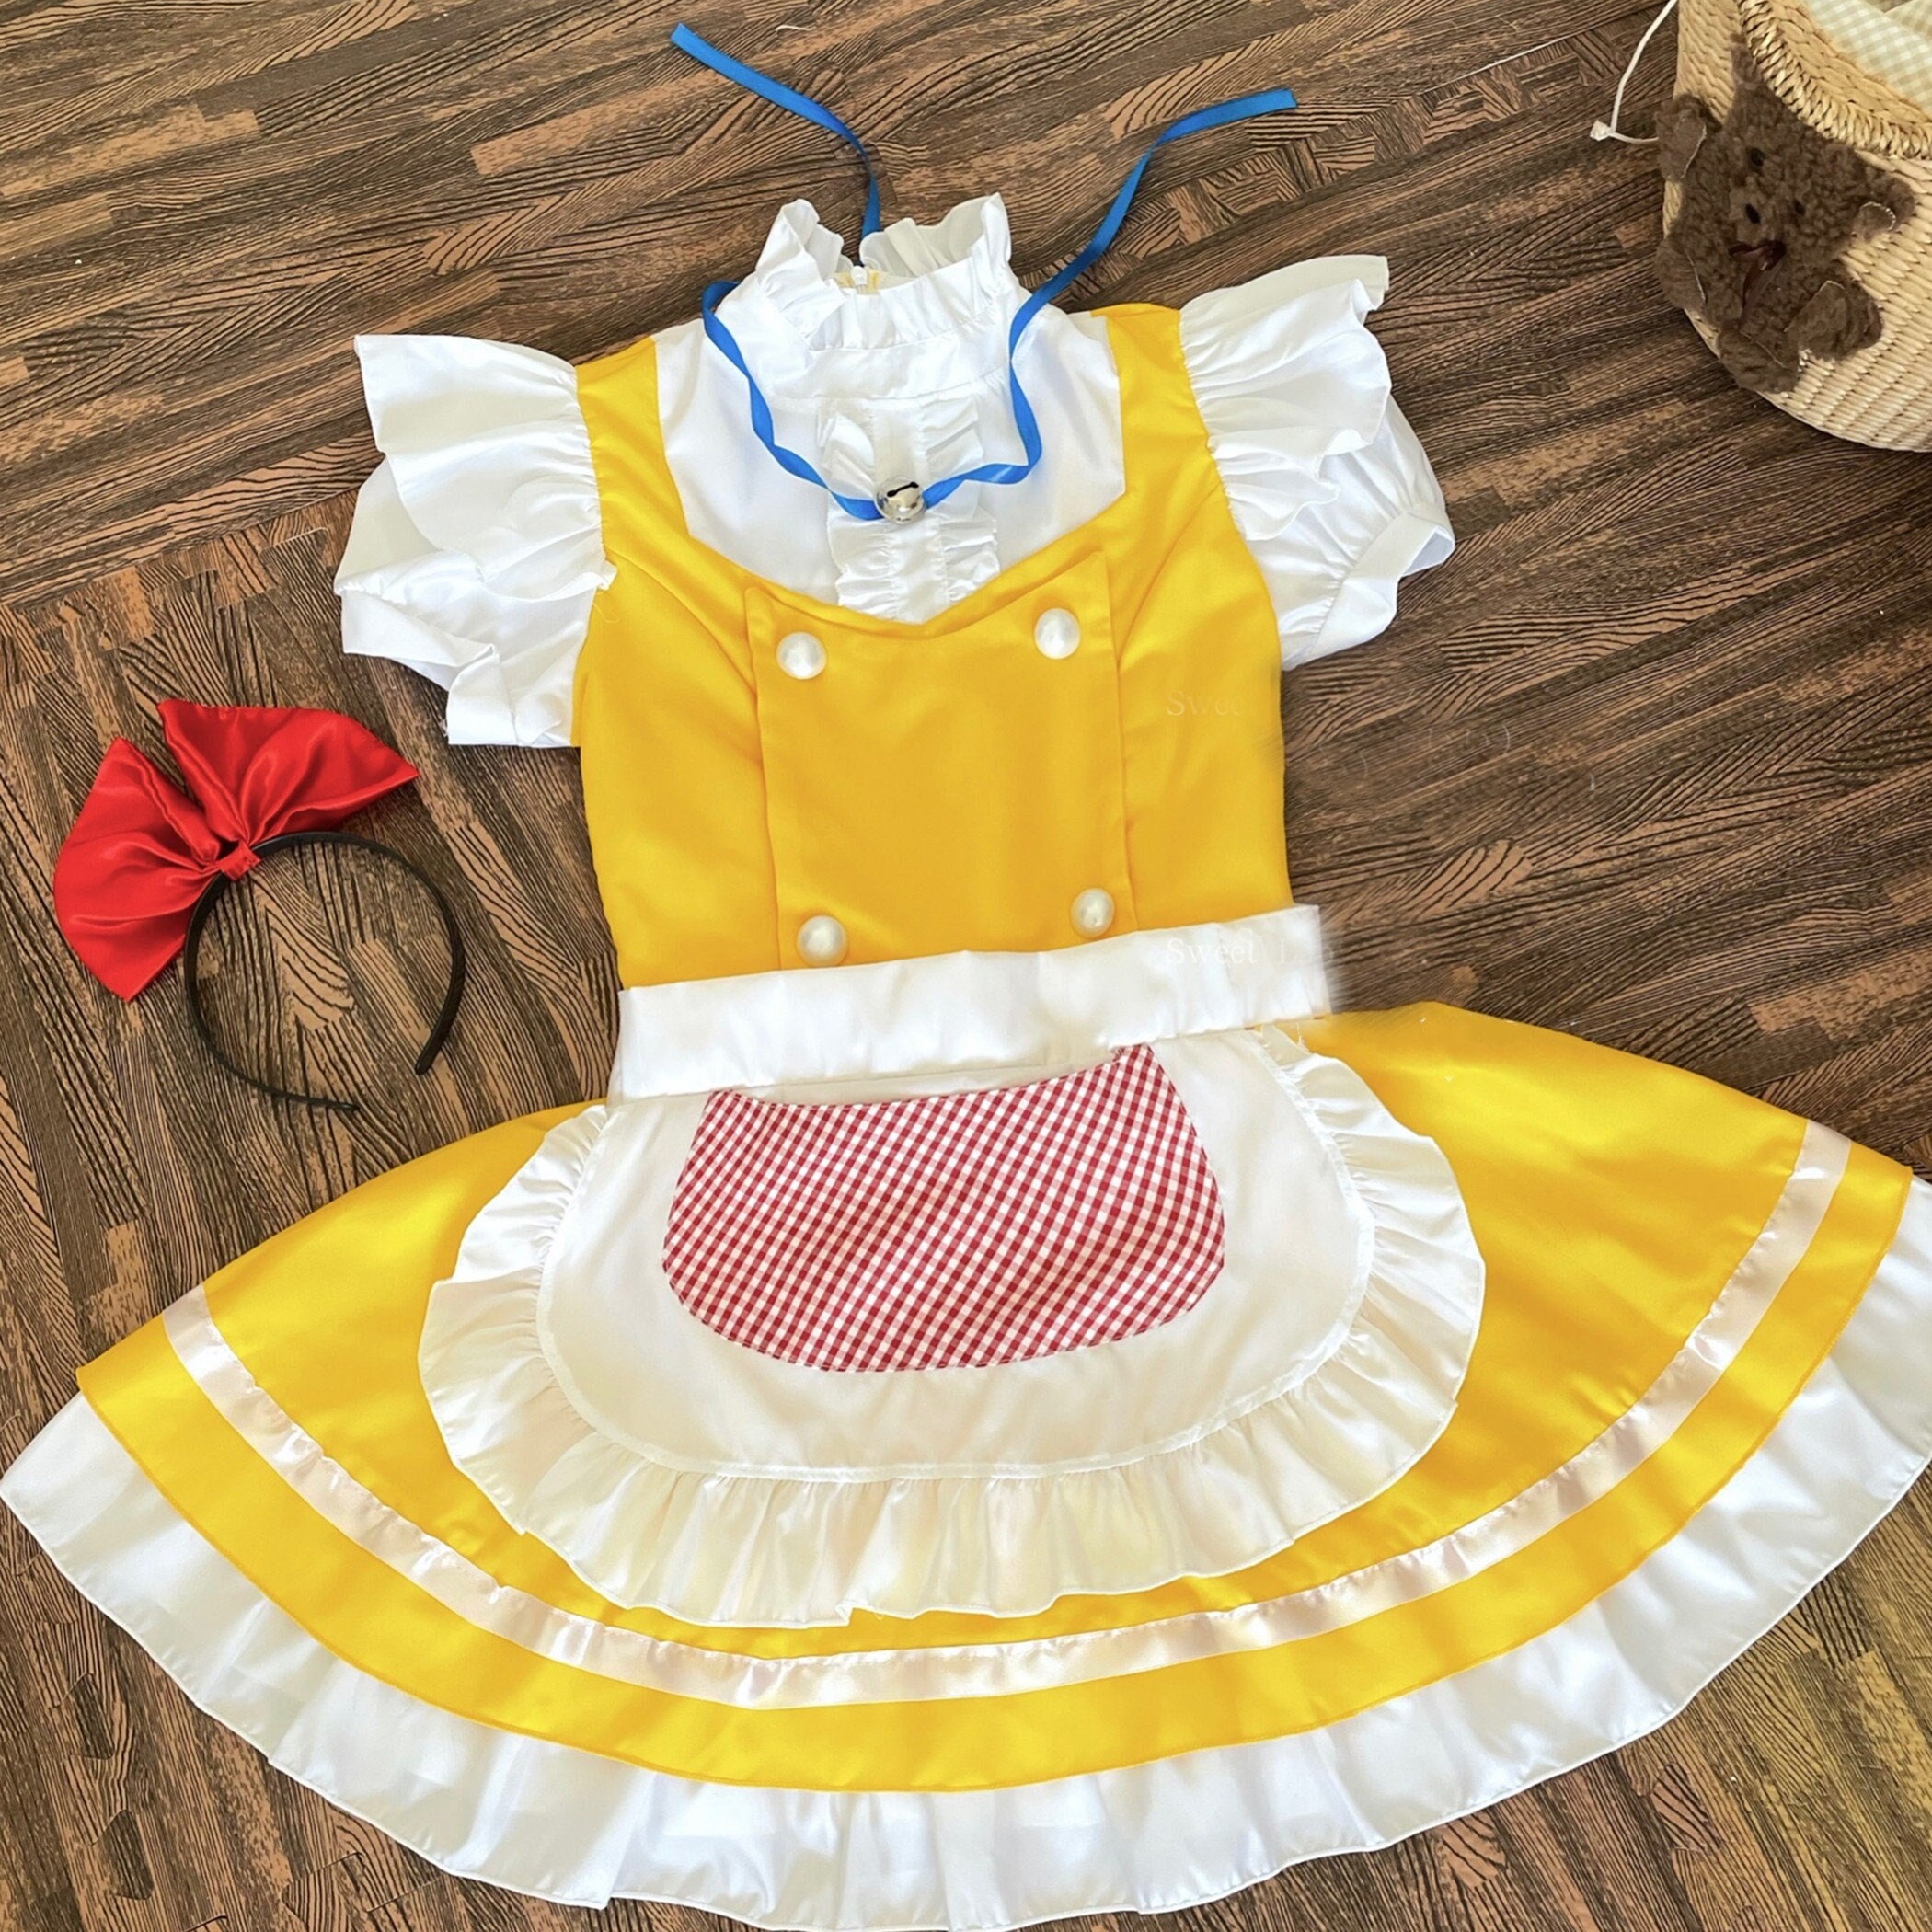 French Maid Dress - Women's Yellow Costume with Headband